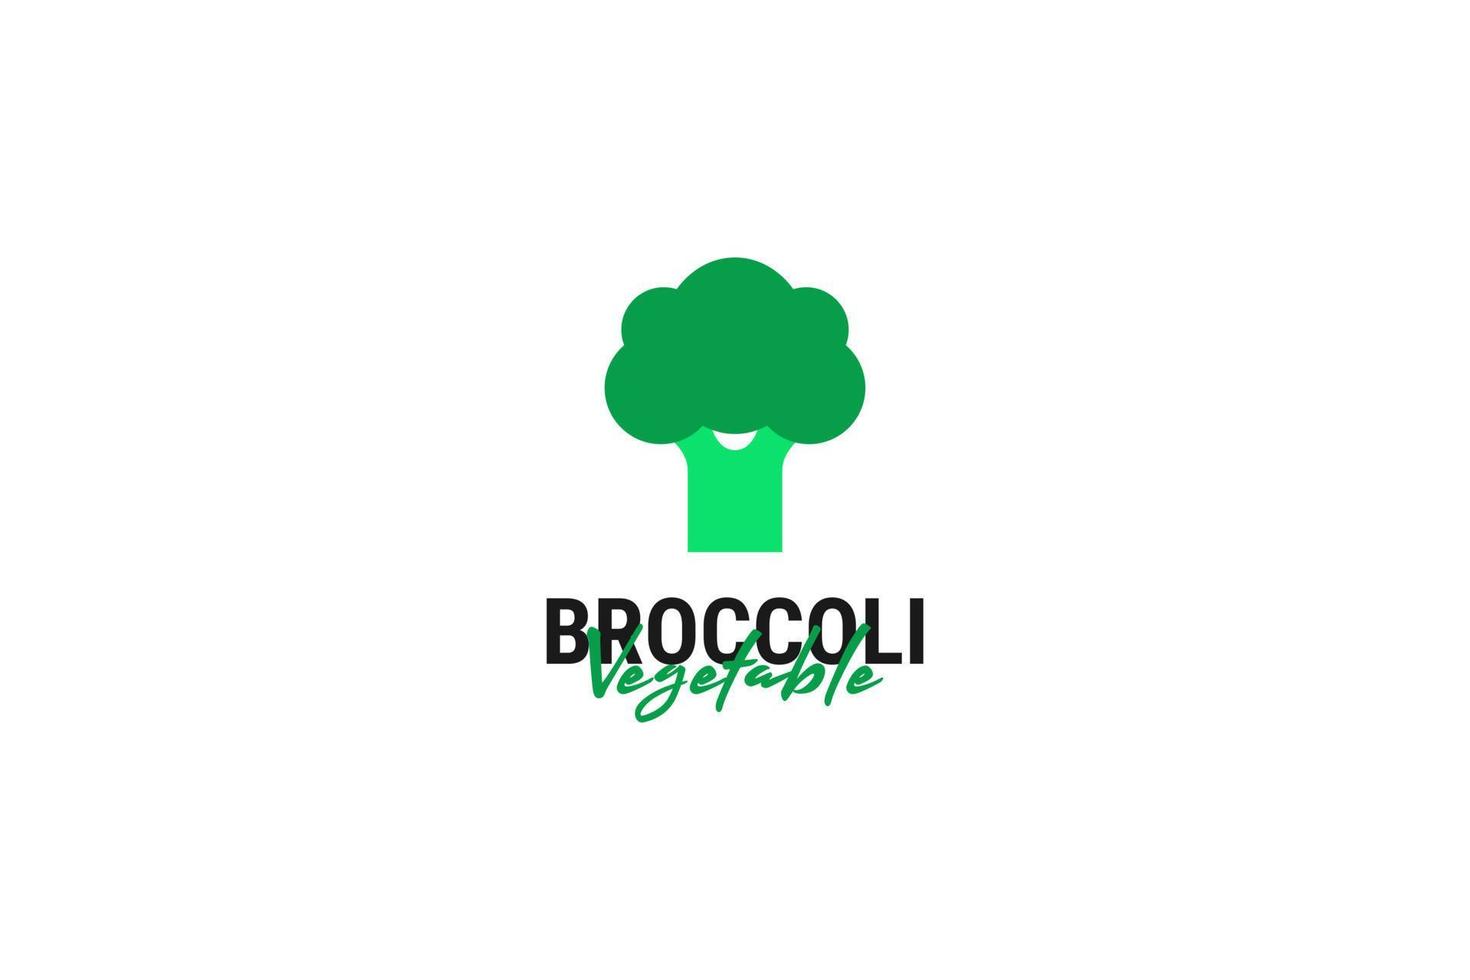 flache Brokkoli-Gemüse-Logo-Design-Vektor-Vorlagen-Illustration vektor